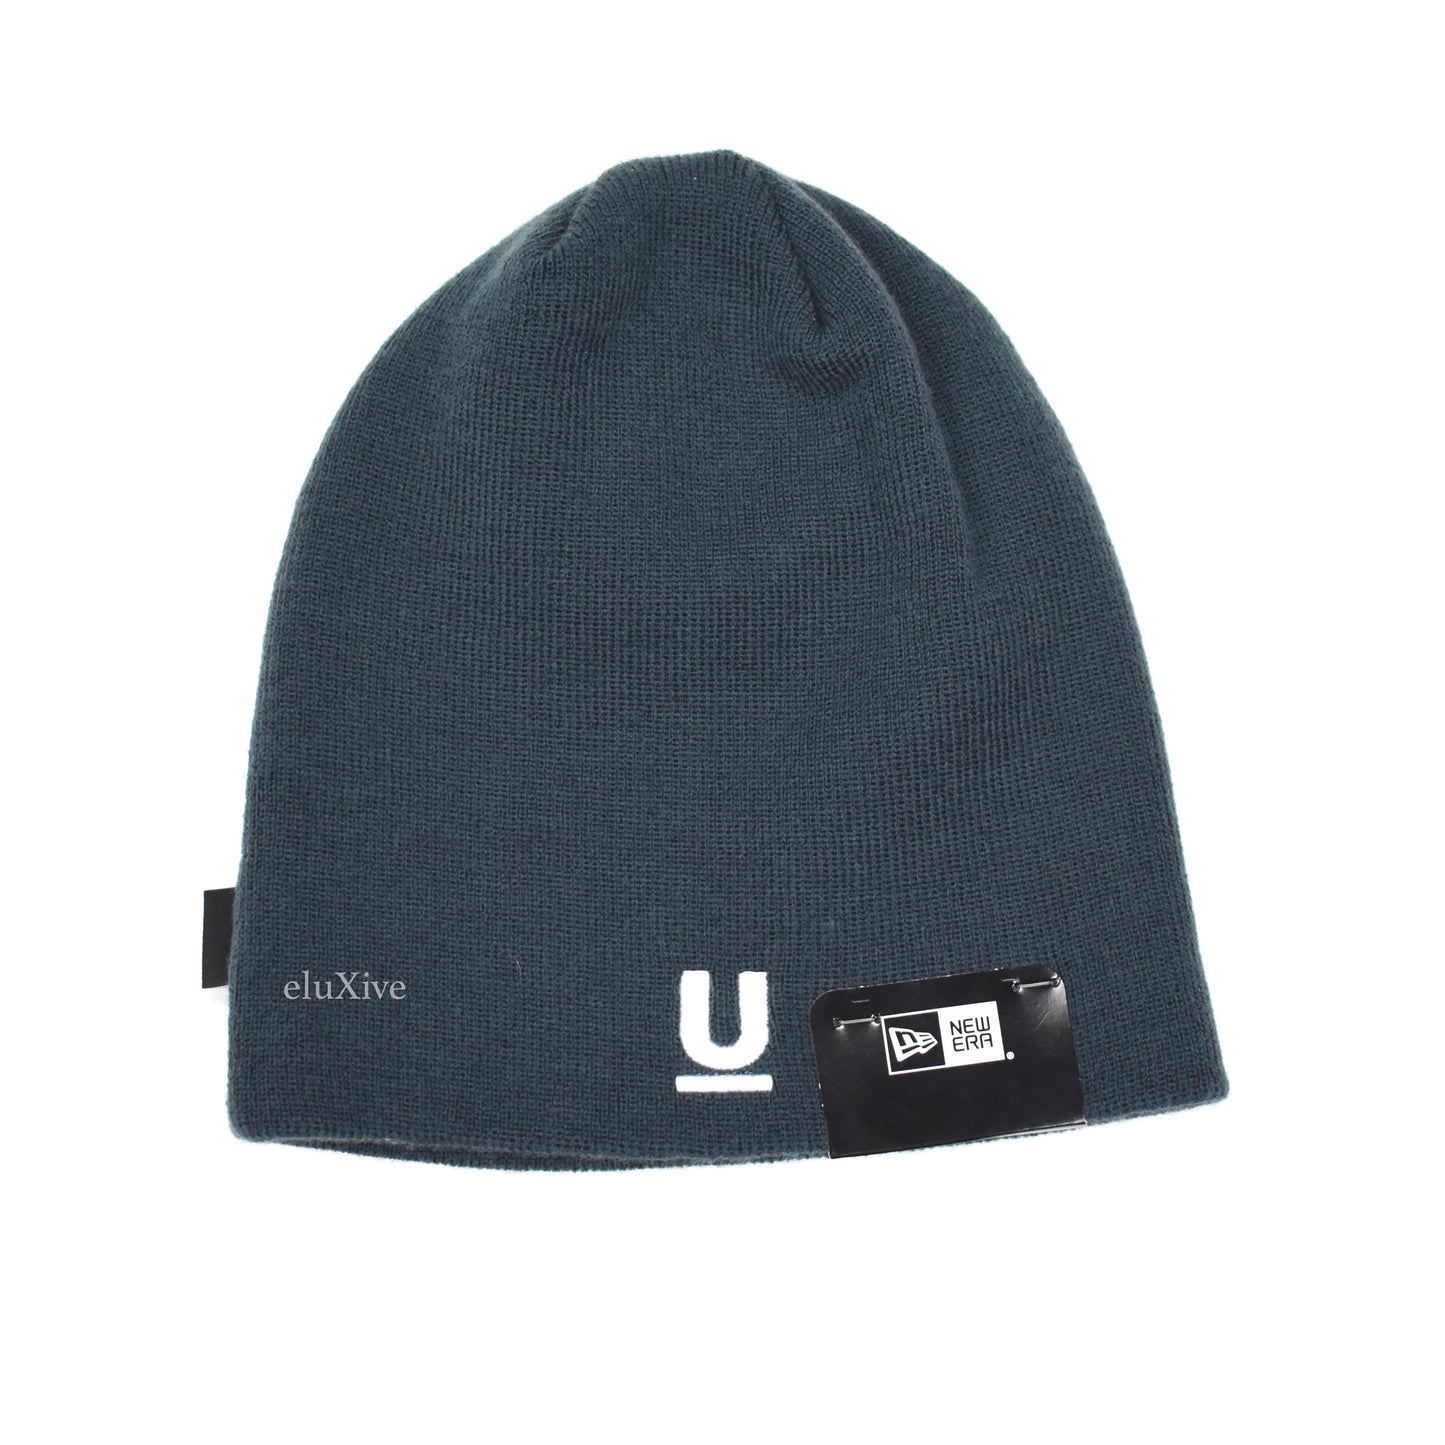 Undercover x New Era - Gray 'U' Logo Beanie